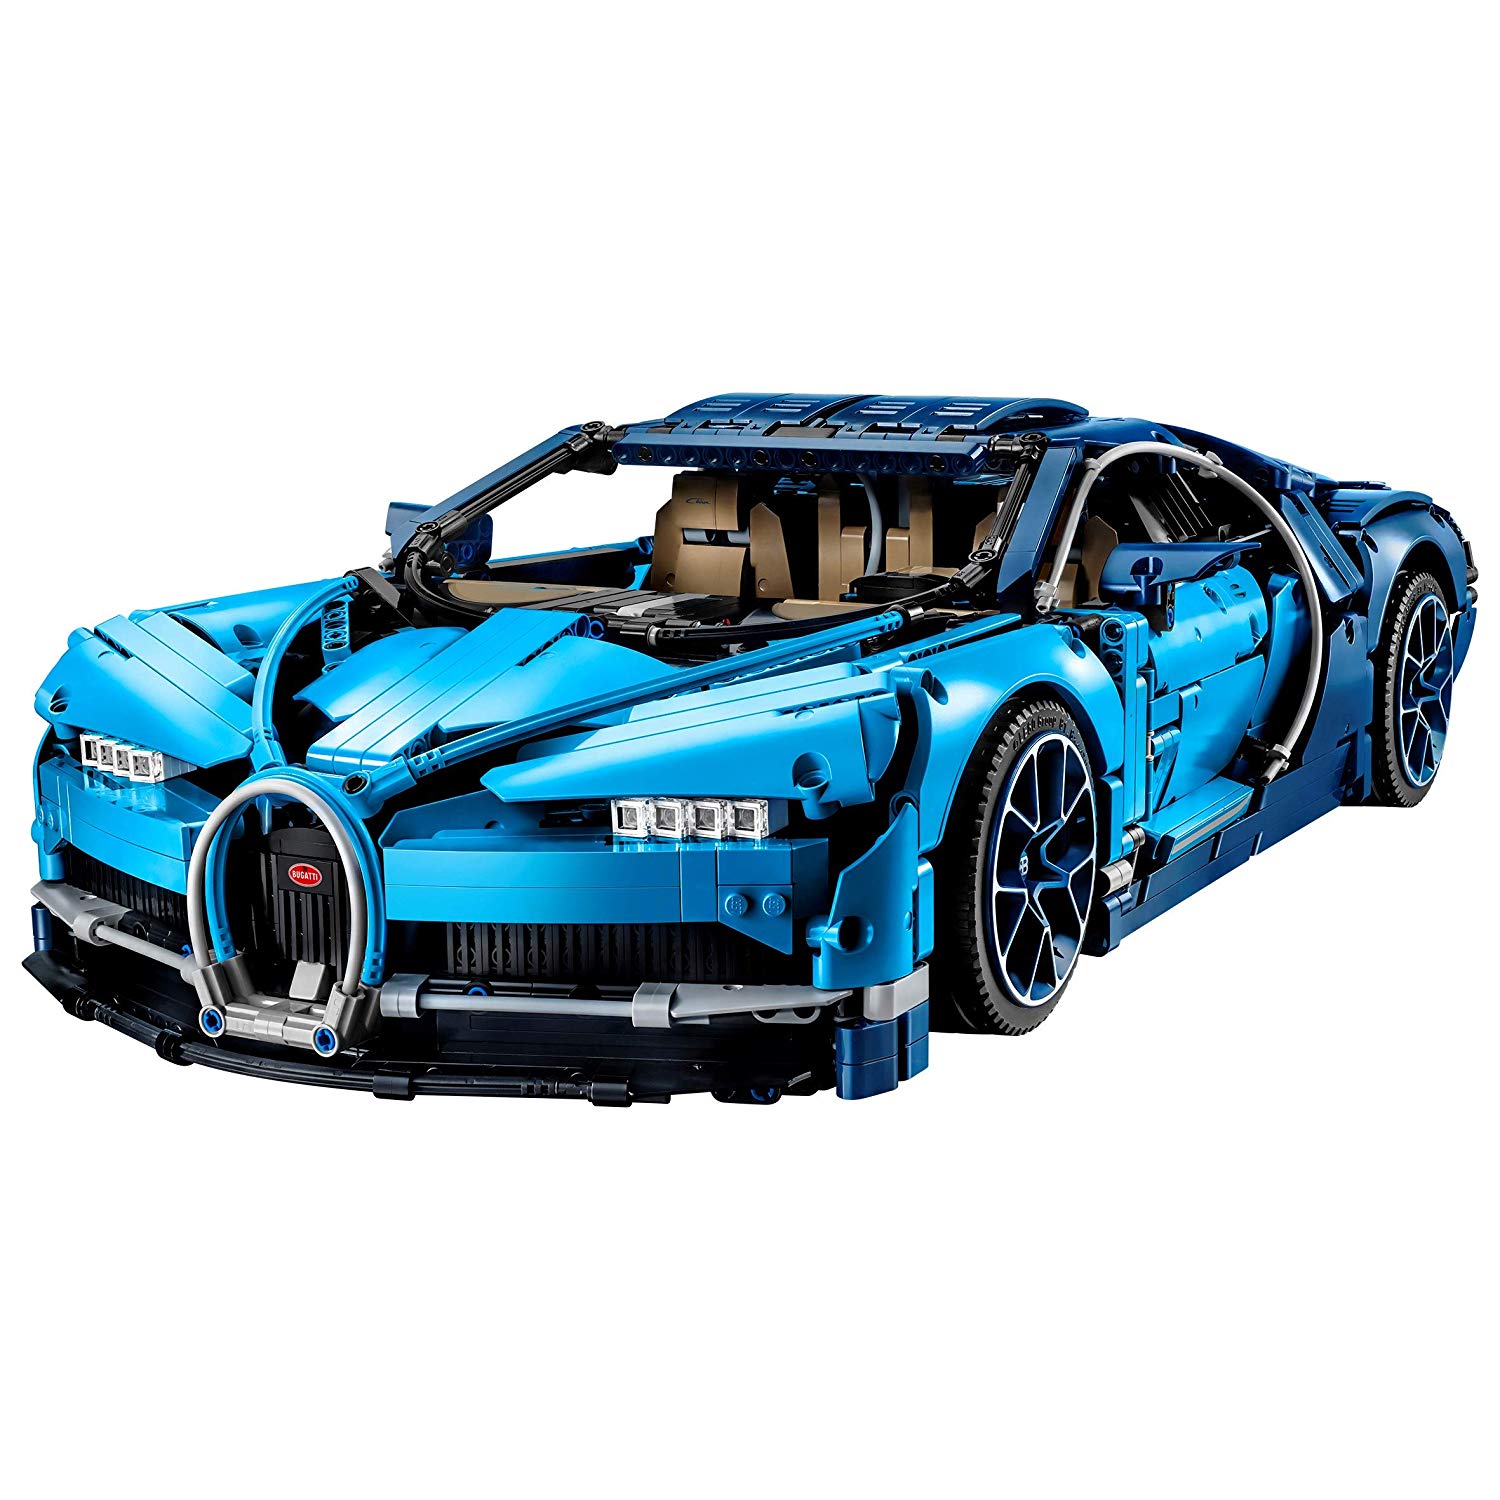 Lego Technic Bugatti Chiron (42083) Car Model